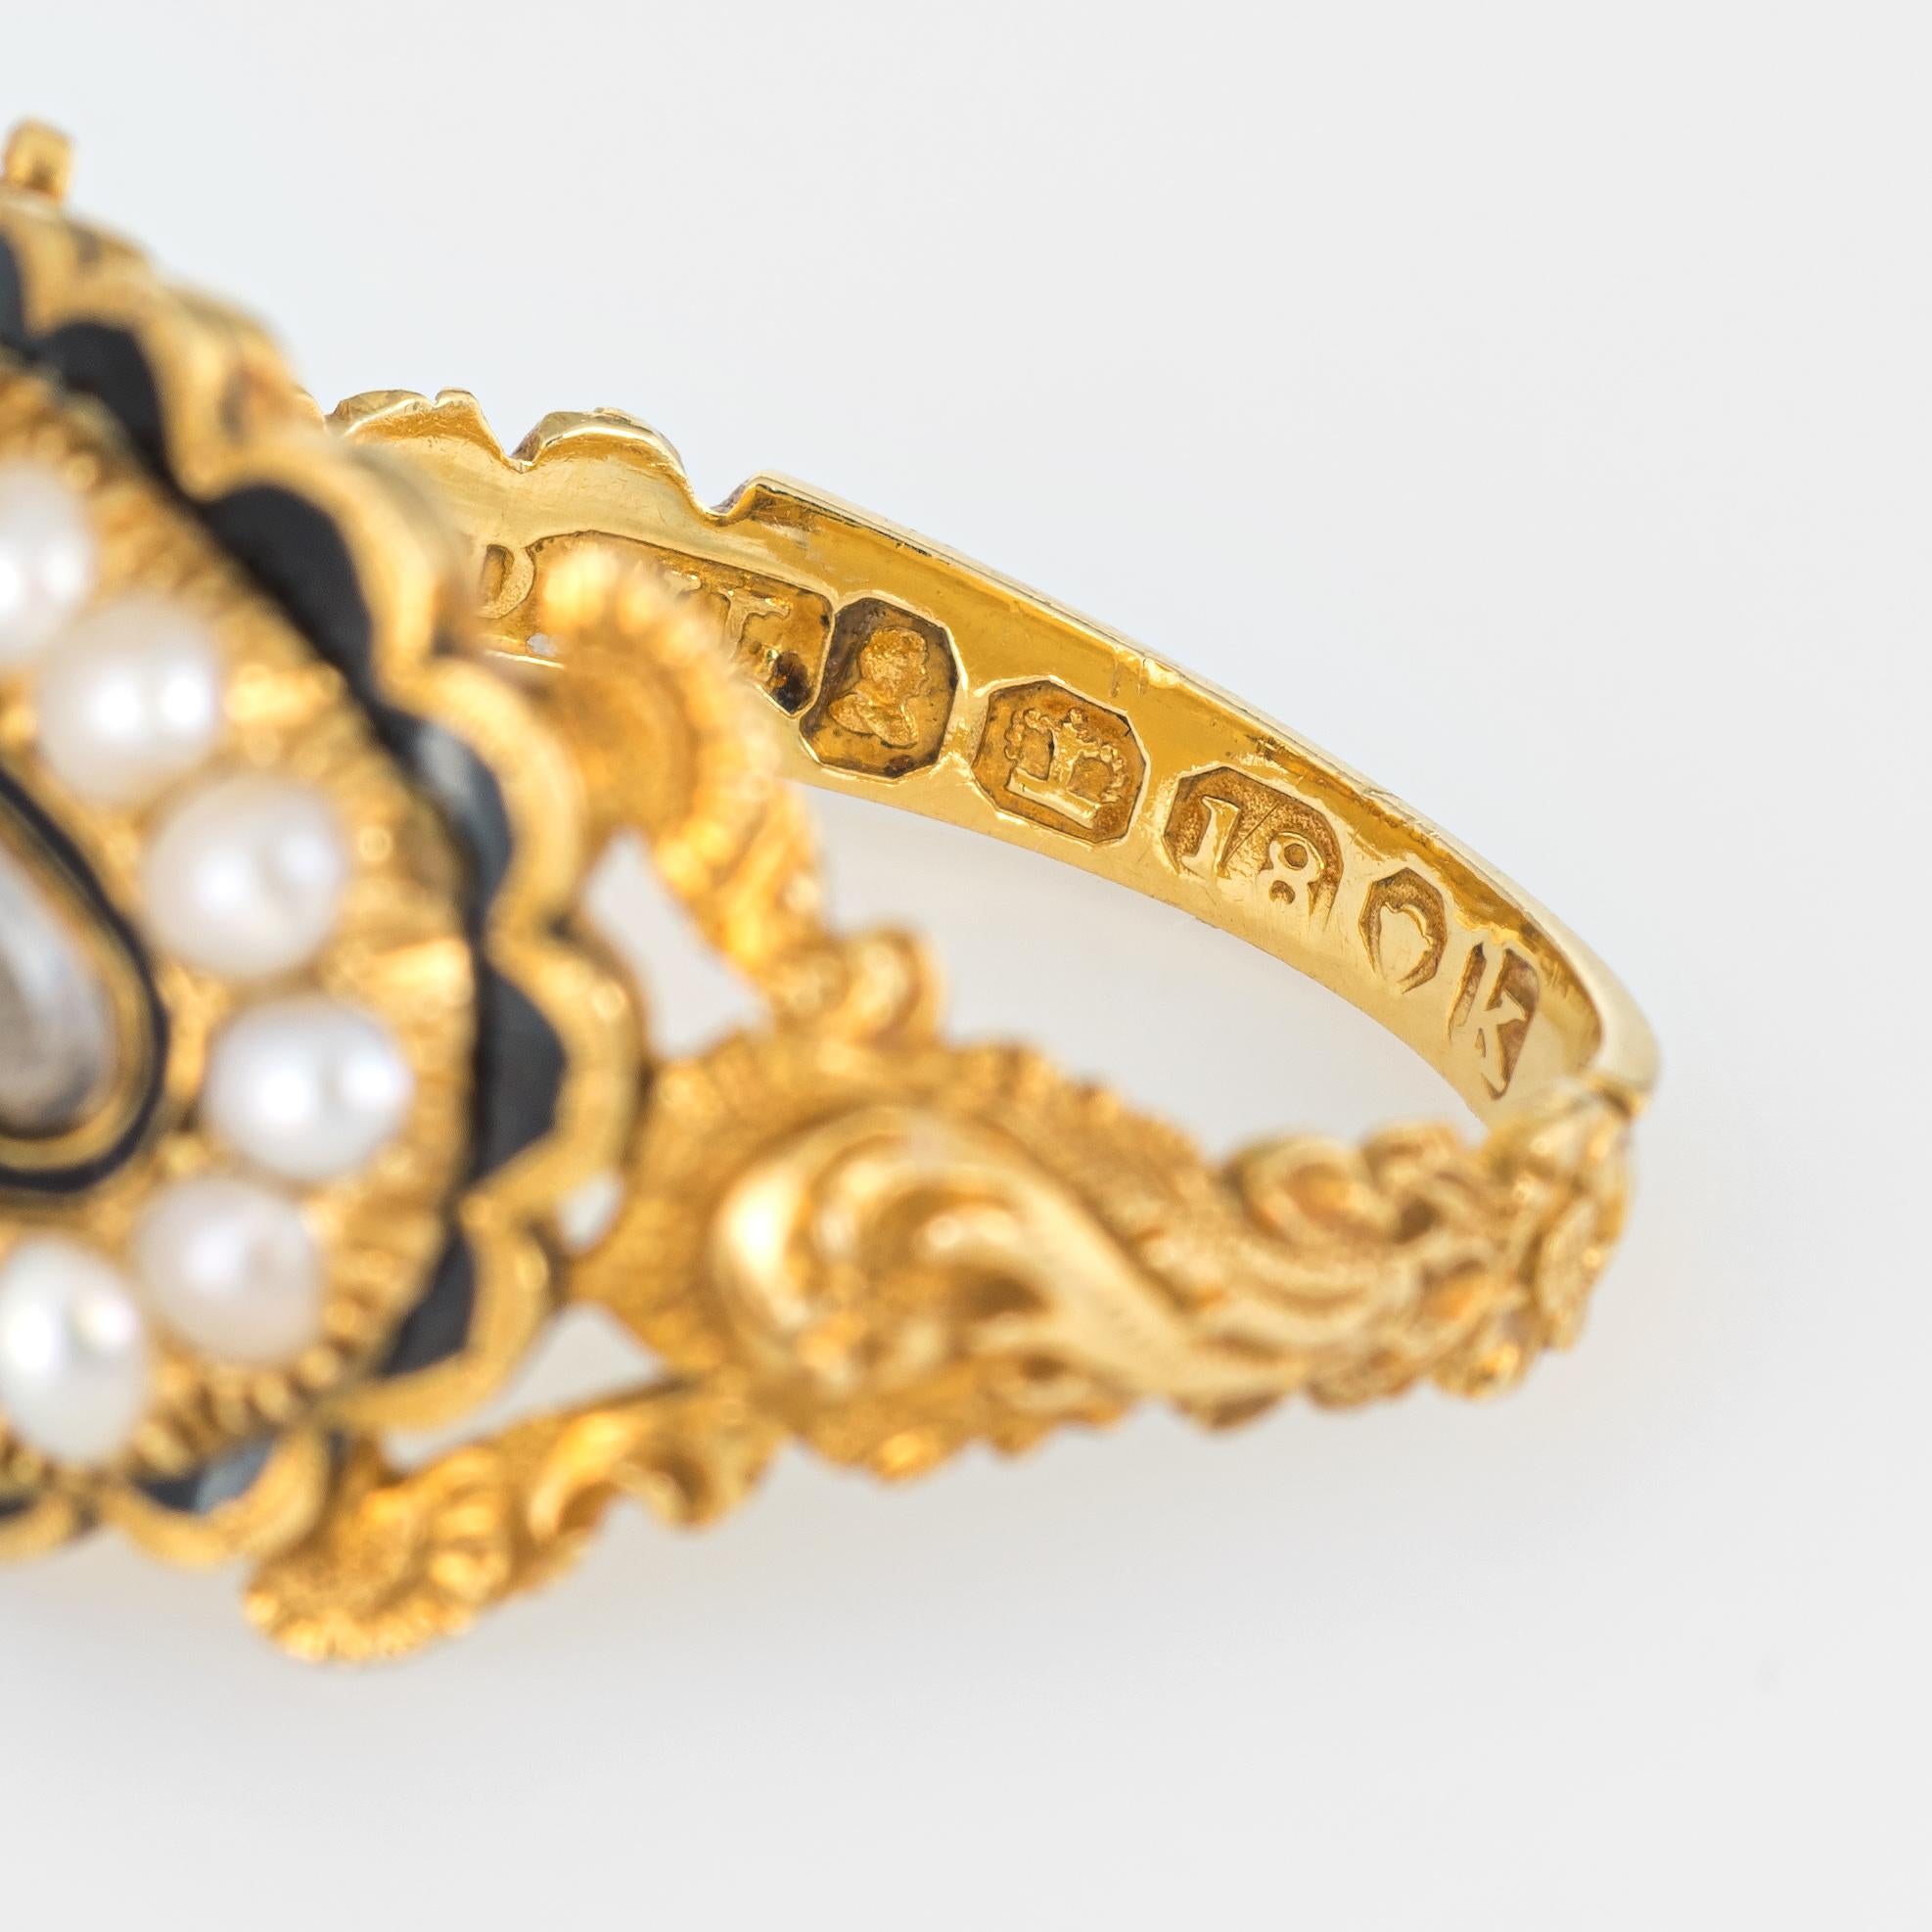 Antique Georgian Era Ring circa 1825 18 Karat Yellow Gold Memorial Hair Jewelry In Good Condition For Sale In Torrance, CA